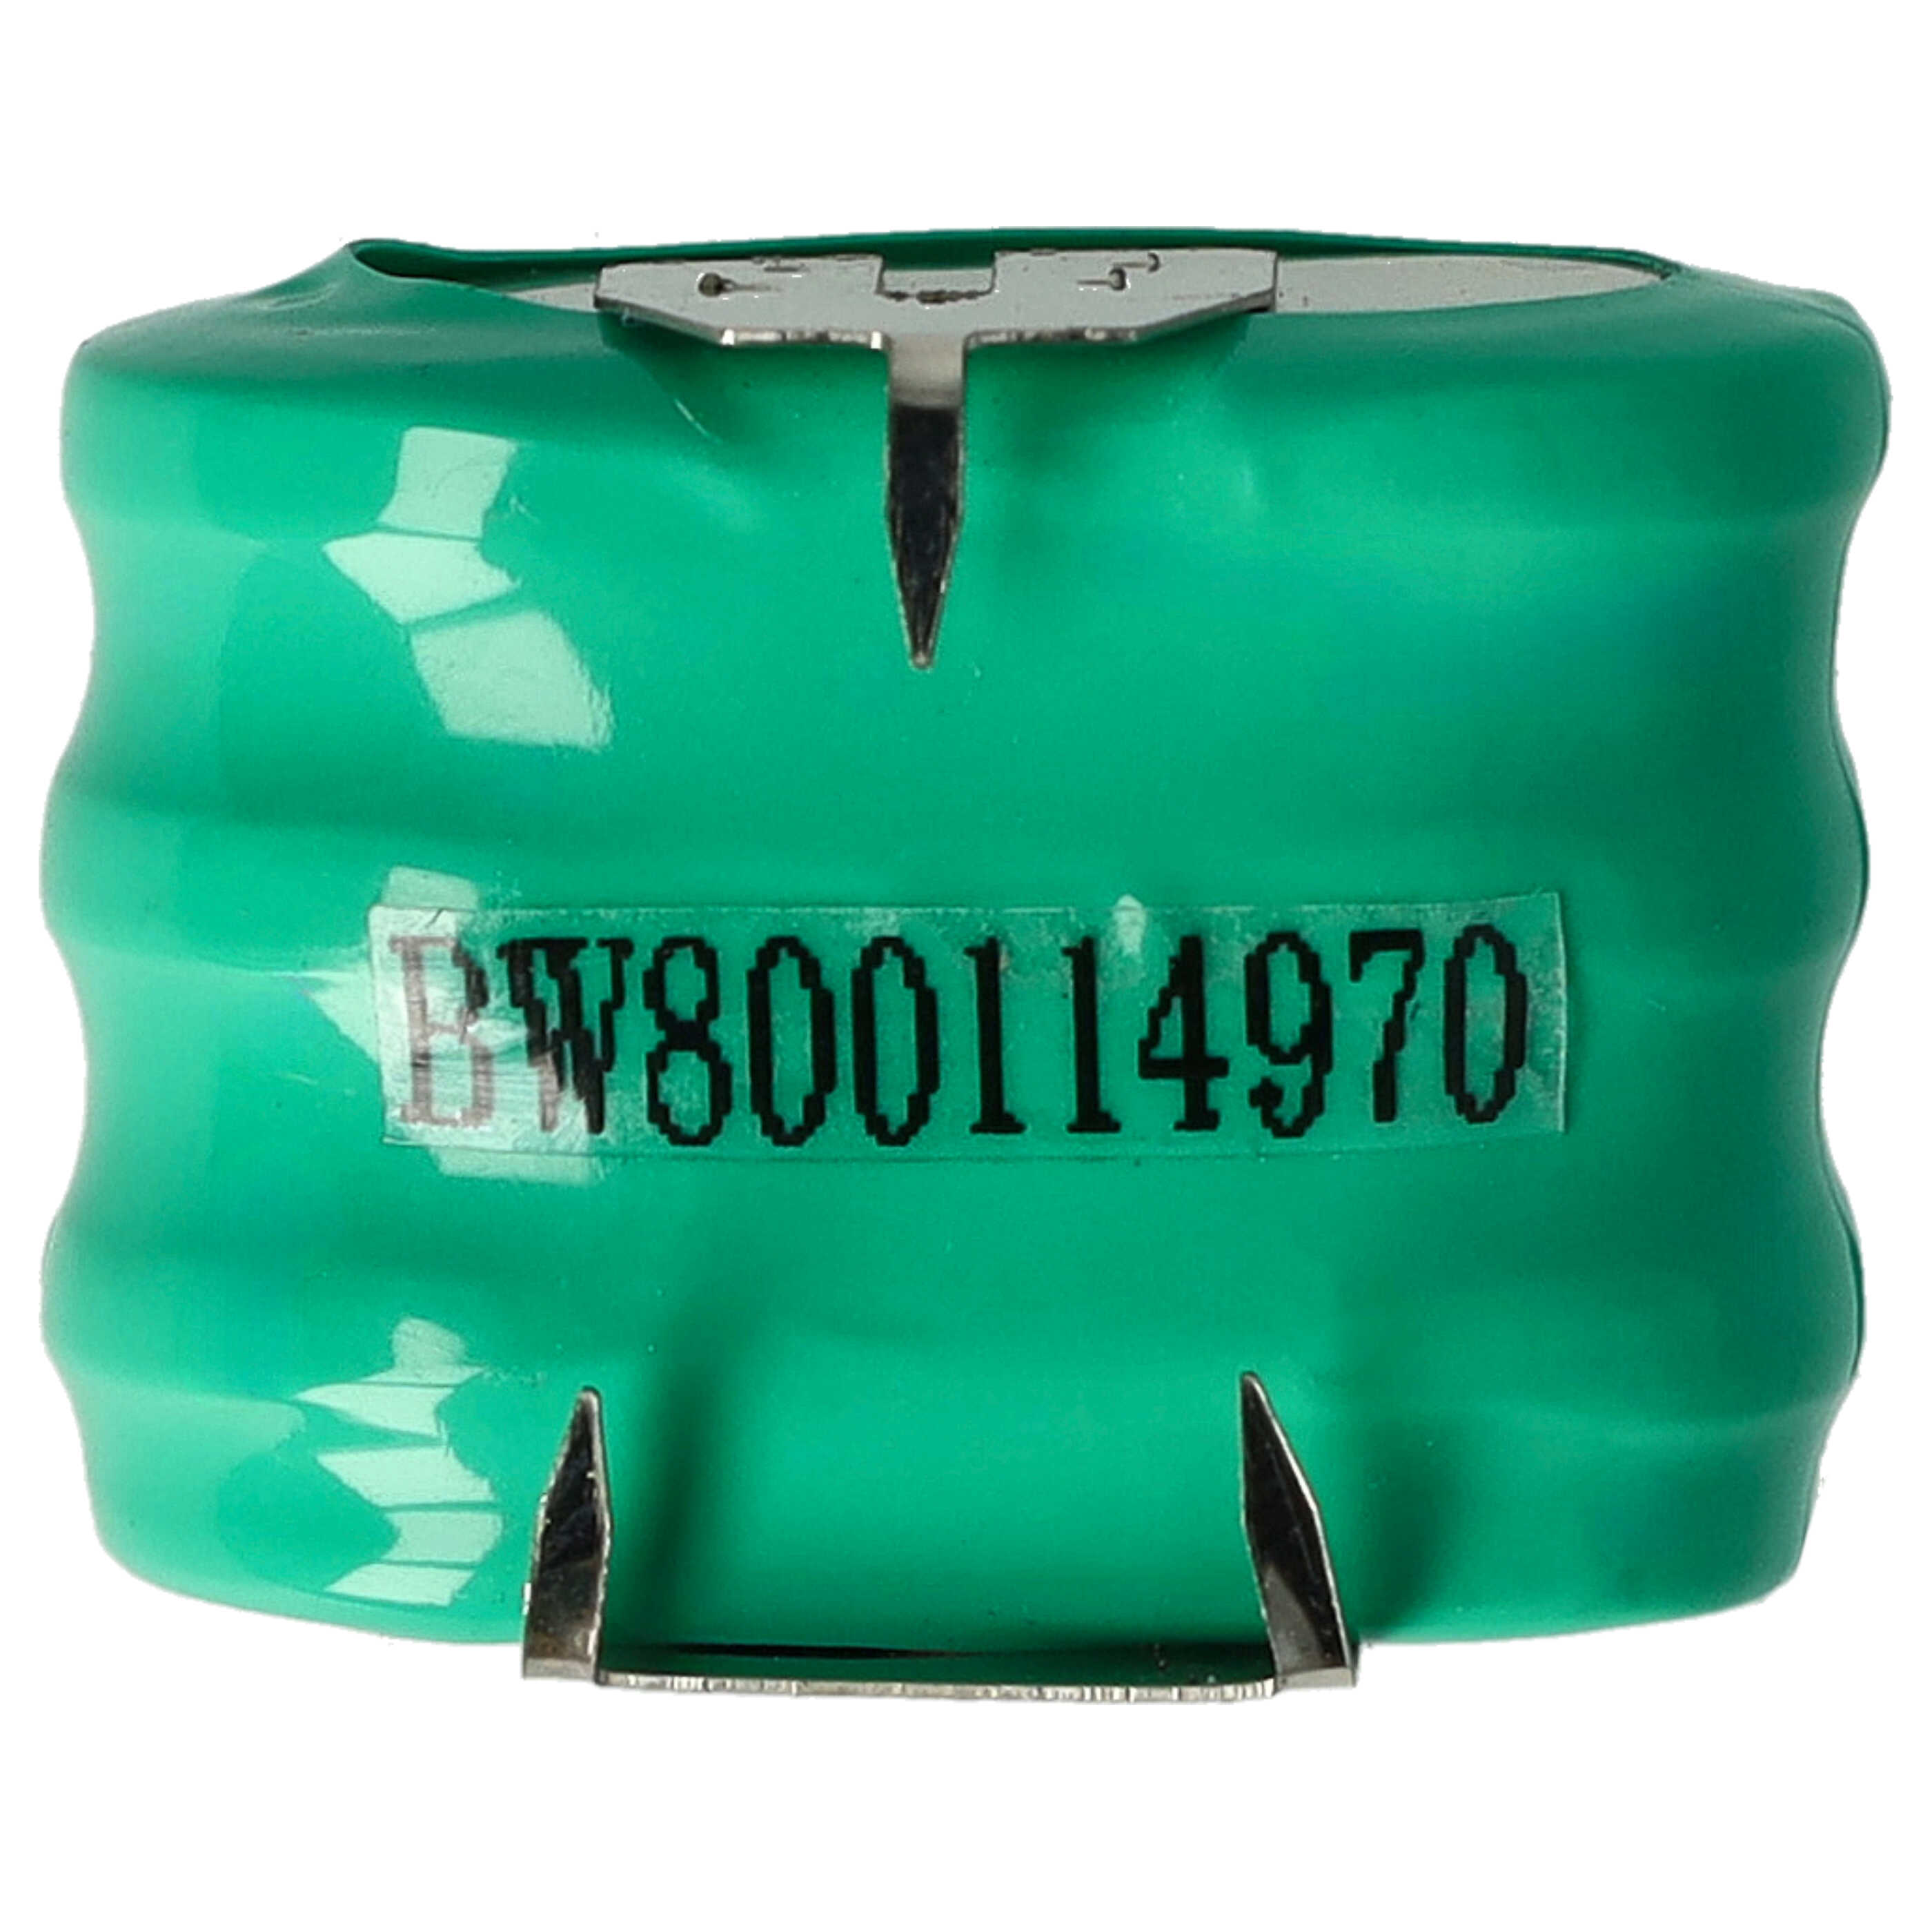 Akumulator guzikowy (3x ogniwo) typ 3/V150H 3 pin do modeli, lamp solarnych itp. - 150 mAh, 3,6 V, NiMH